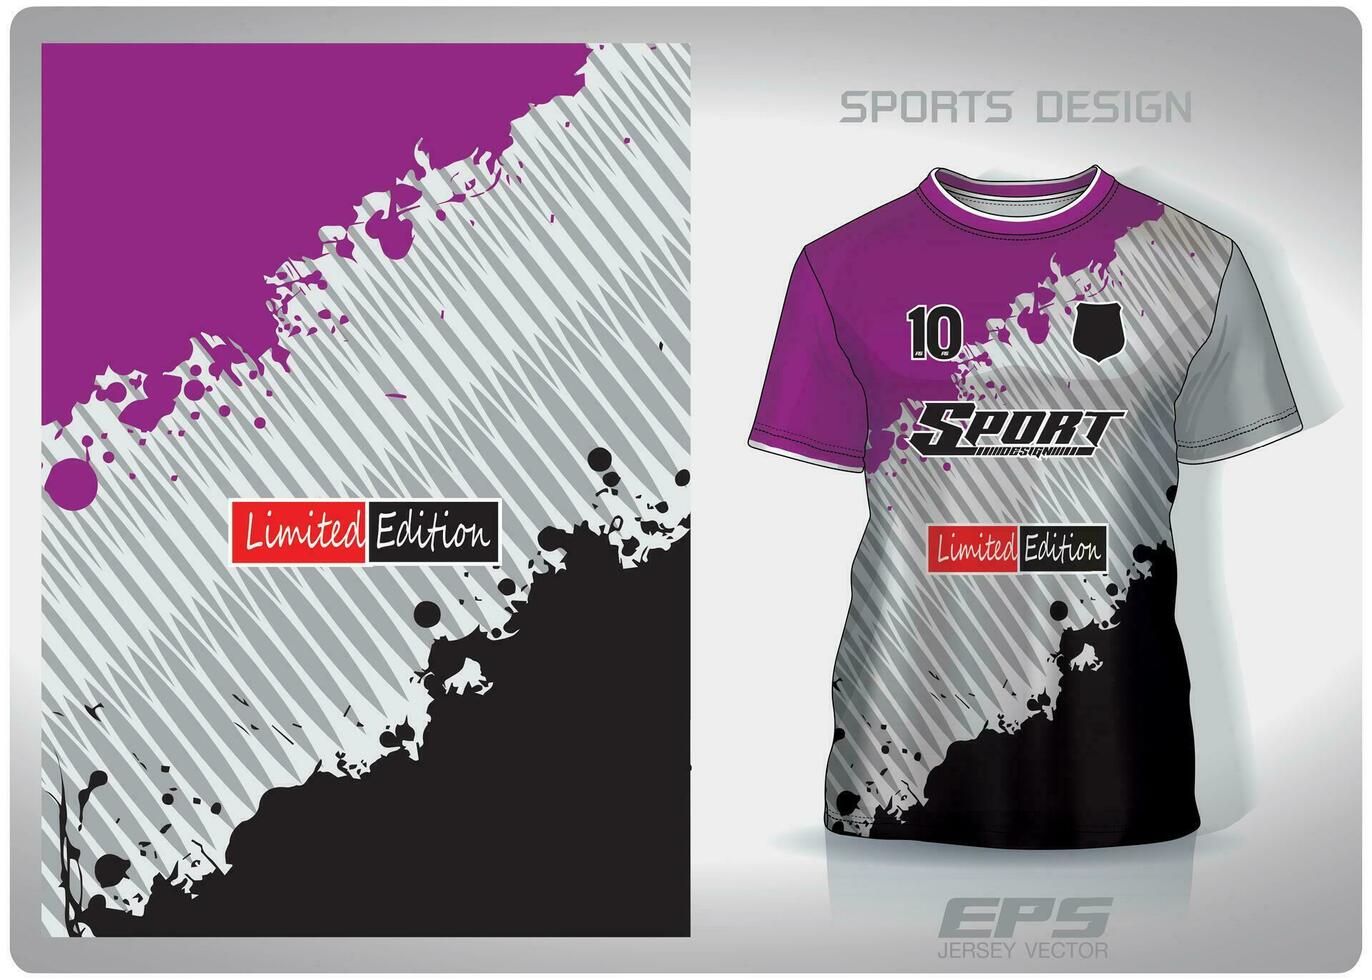 Vector sports shirt background image.black purple salad brush comb pattern design, illustration, textile background for sports t-shirt, football jersey shirt